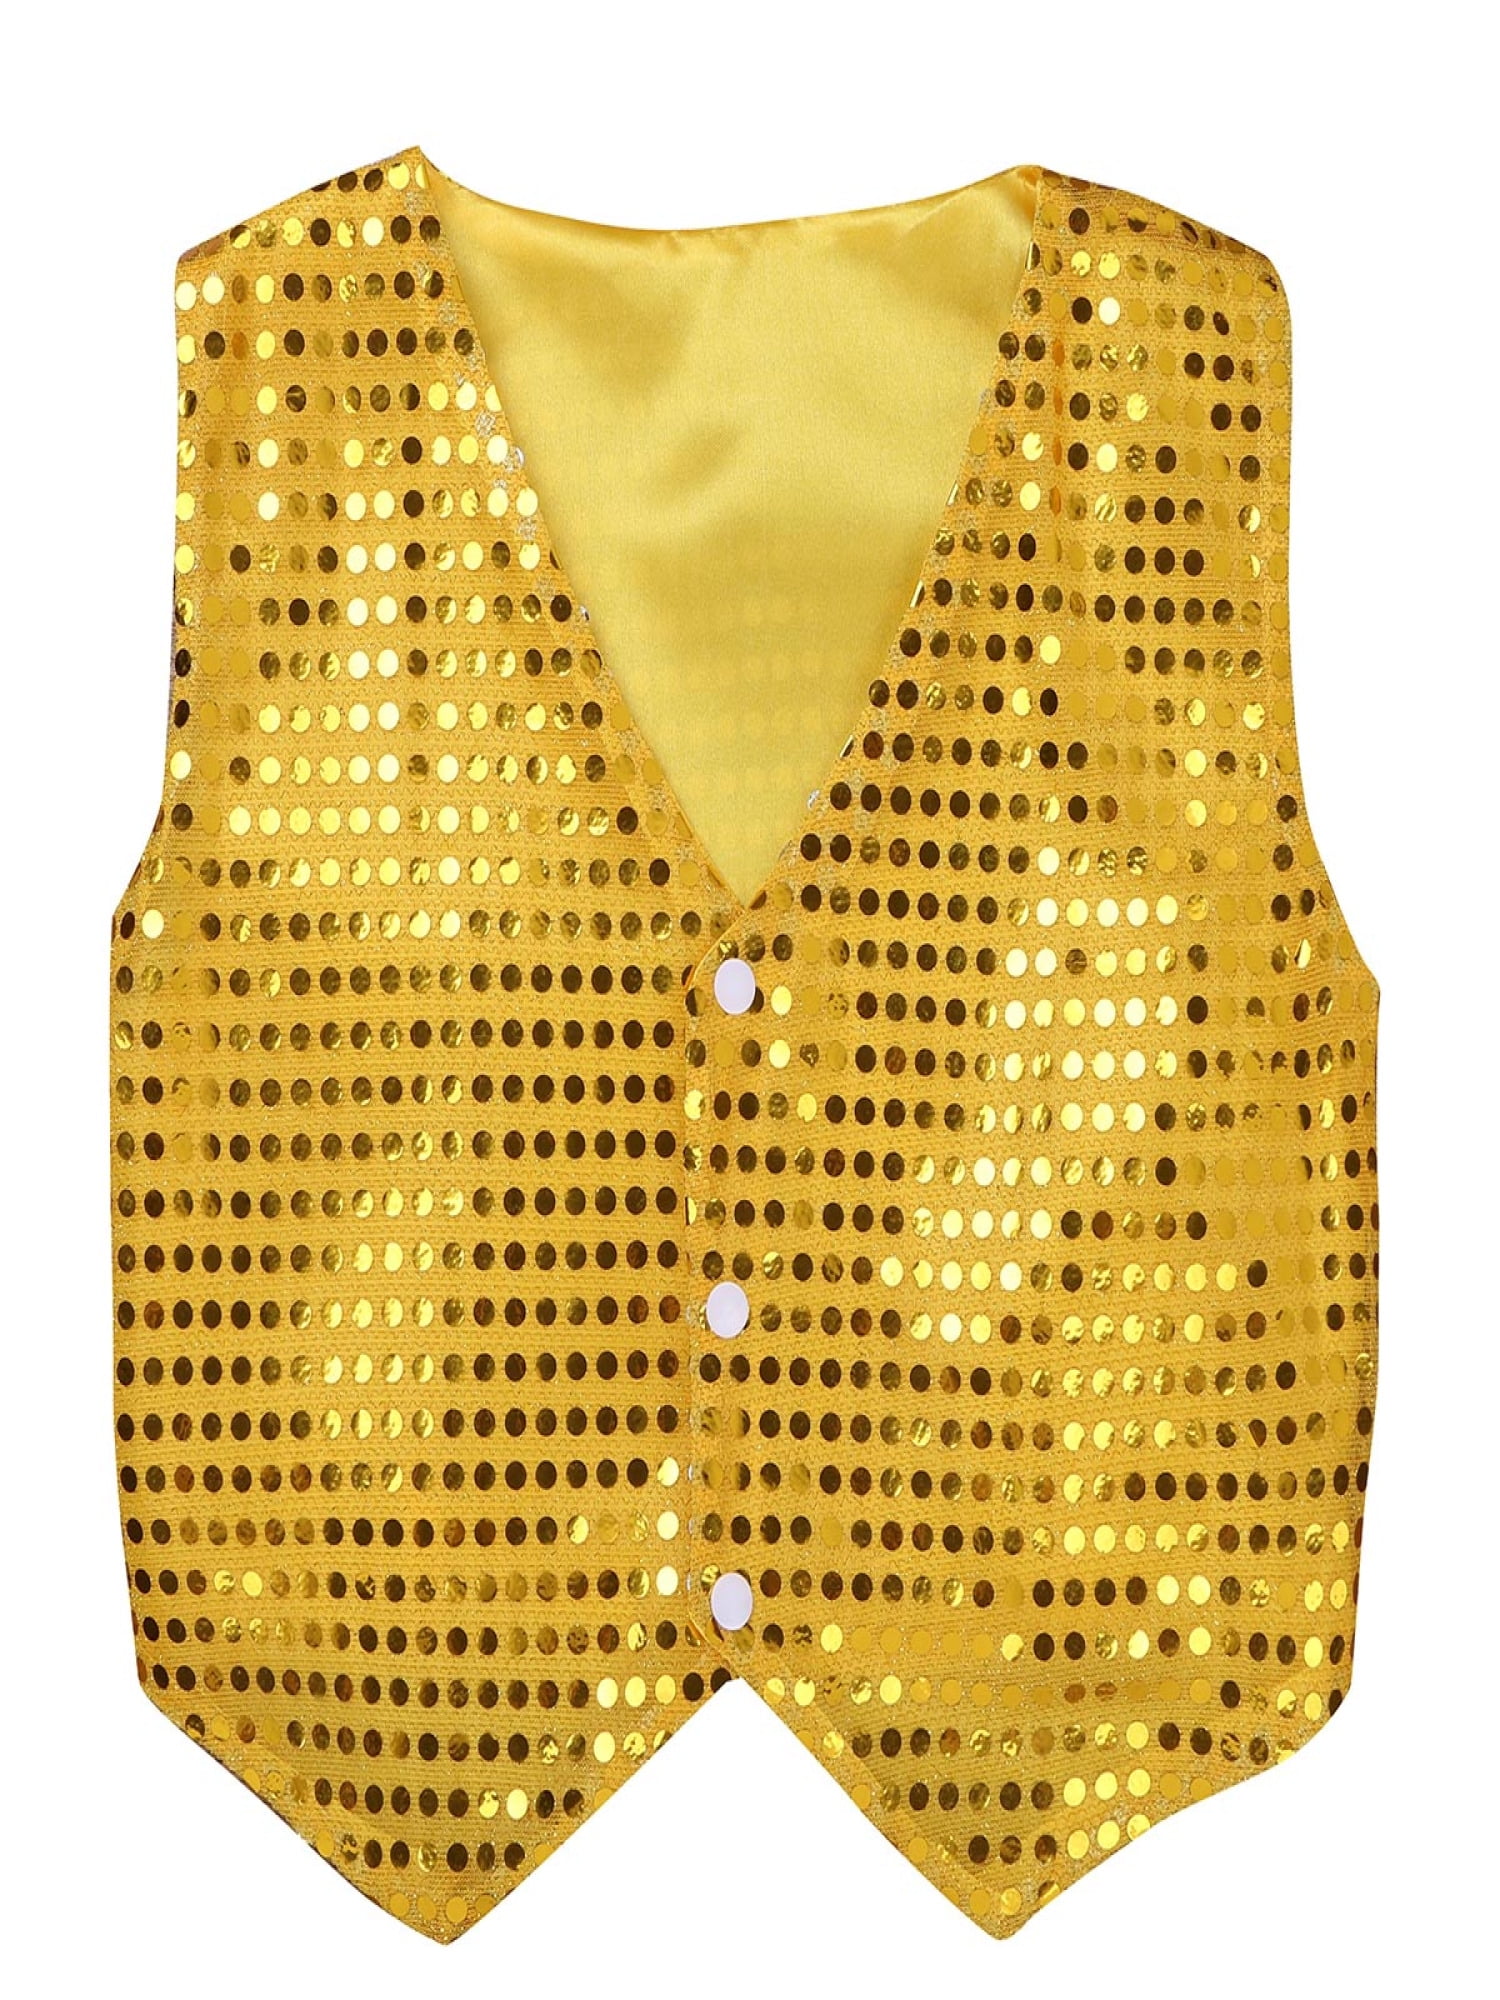 TiaoBug Boy Girl Glittery Sequined Vest Jazz Hip-hop Dance Costume ...